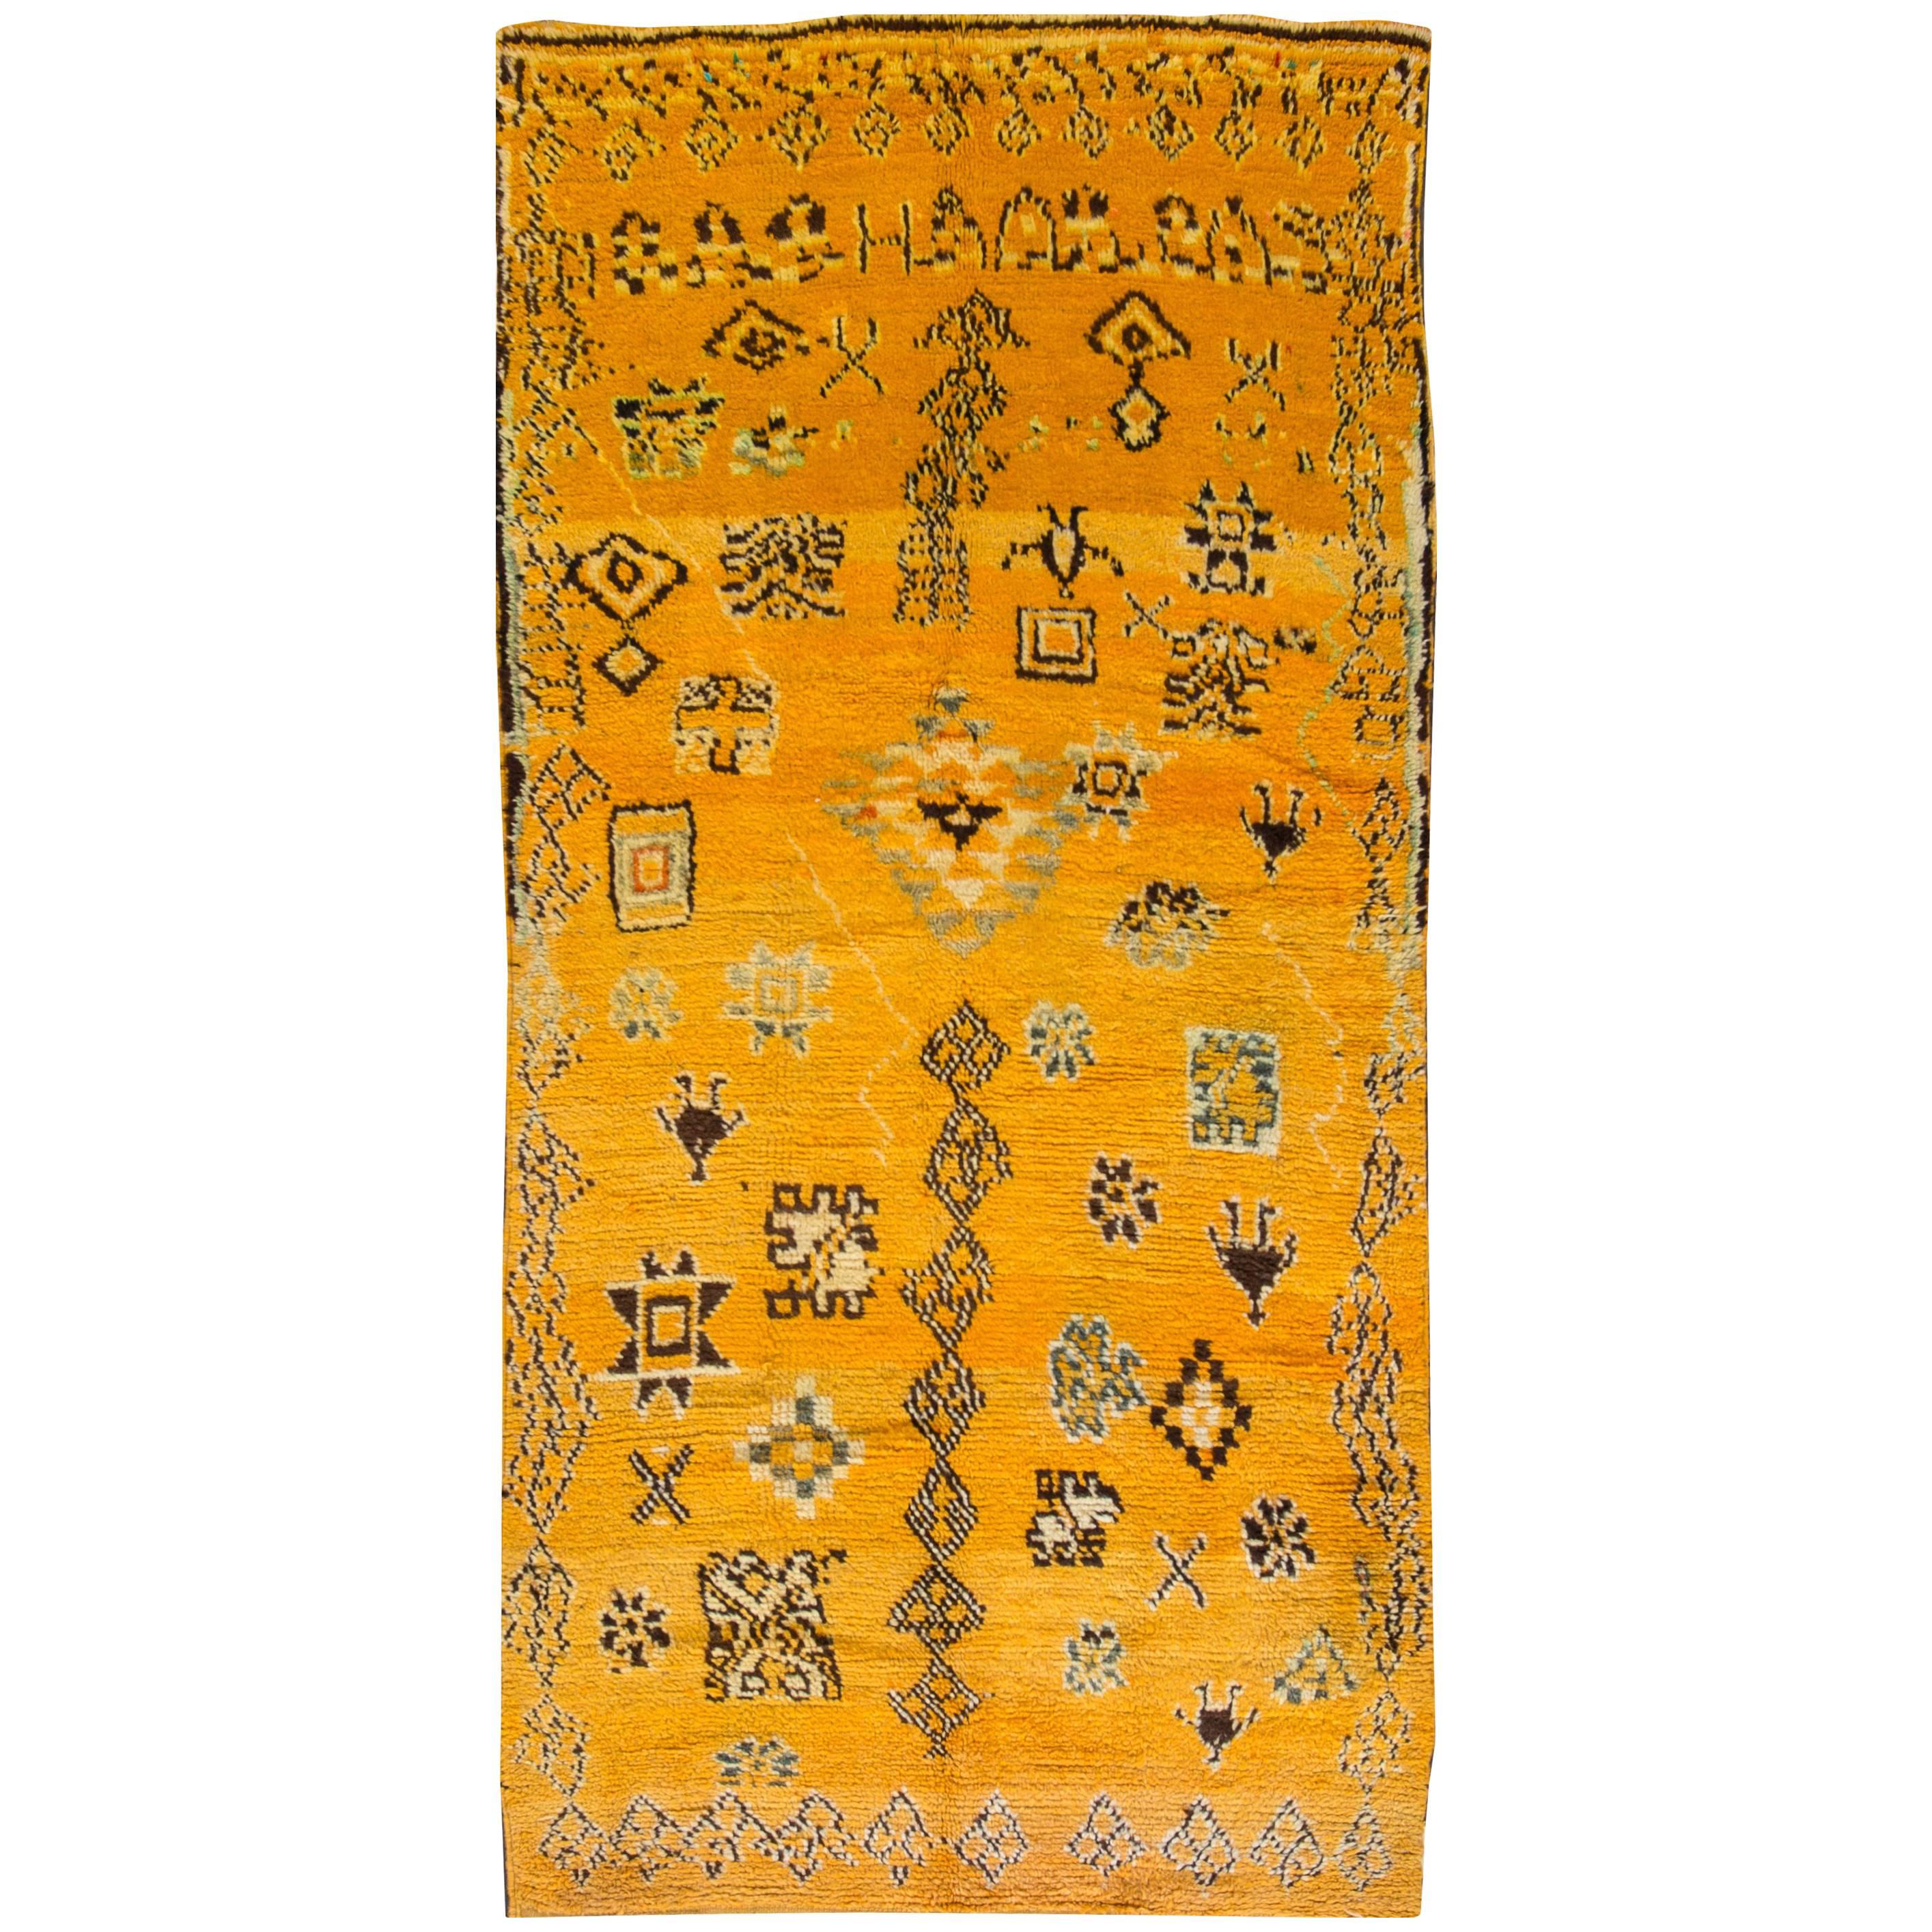 Simply Beautiful Vintage Moroccan Rug